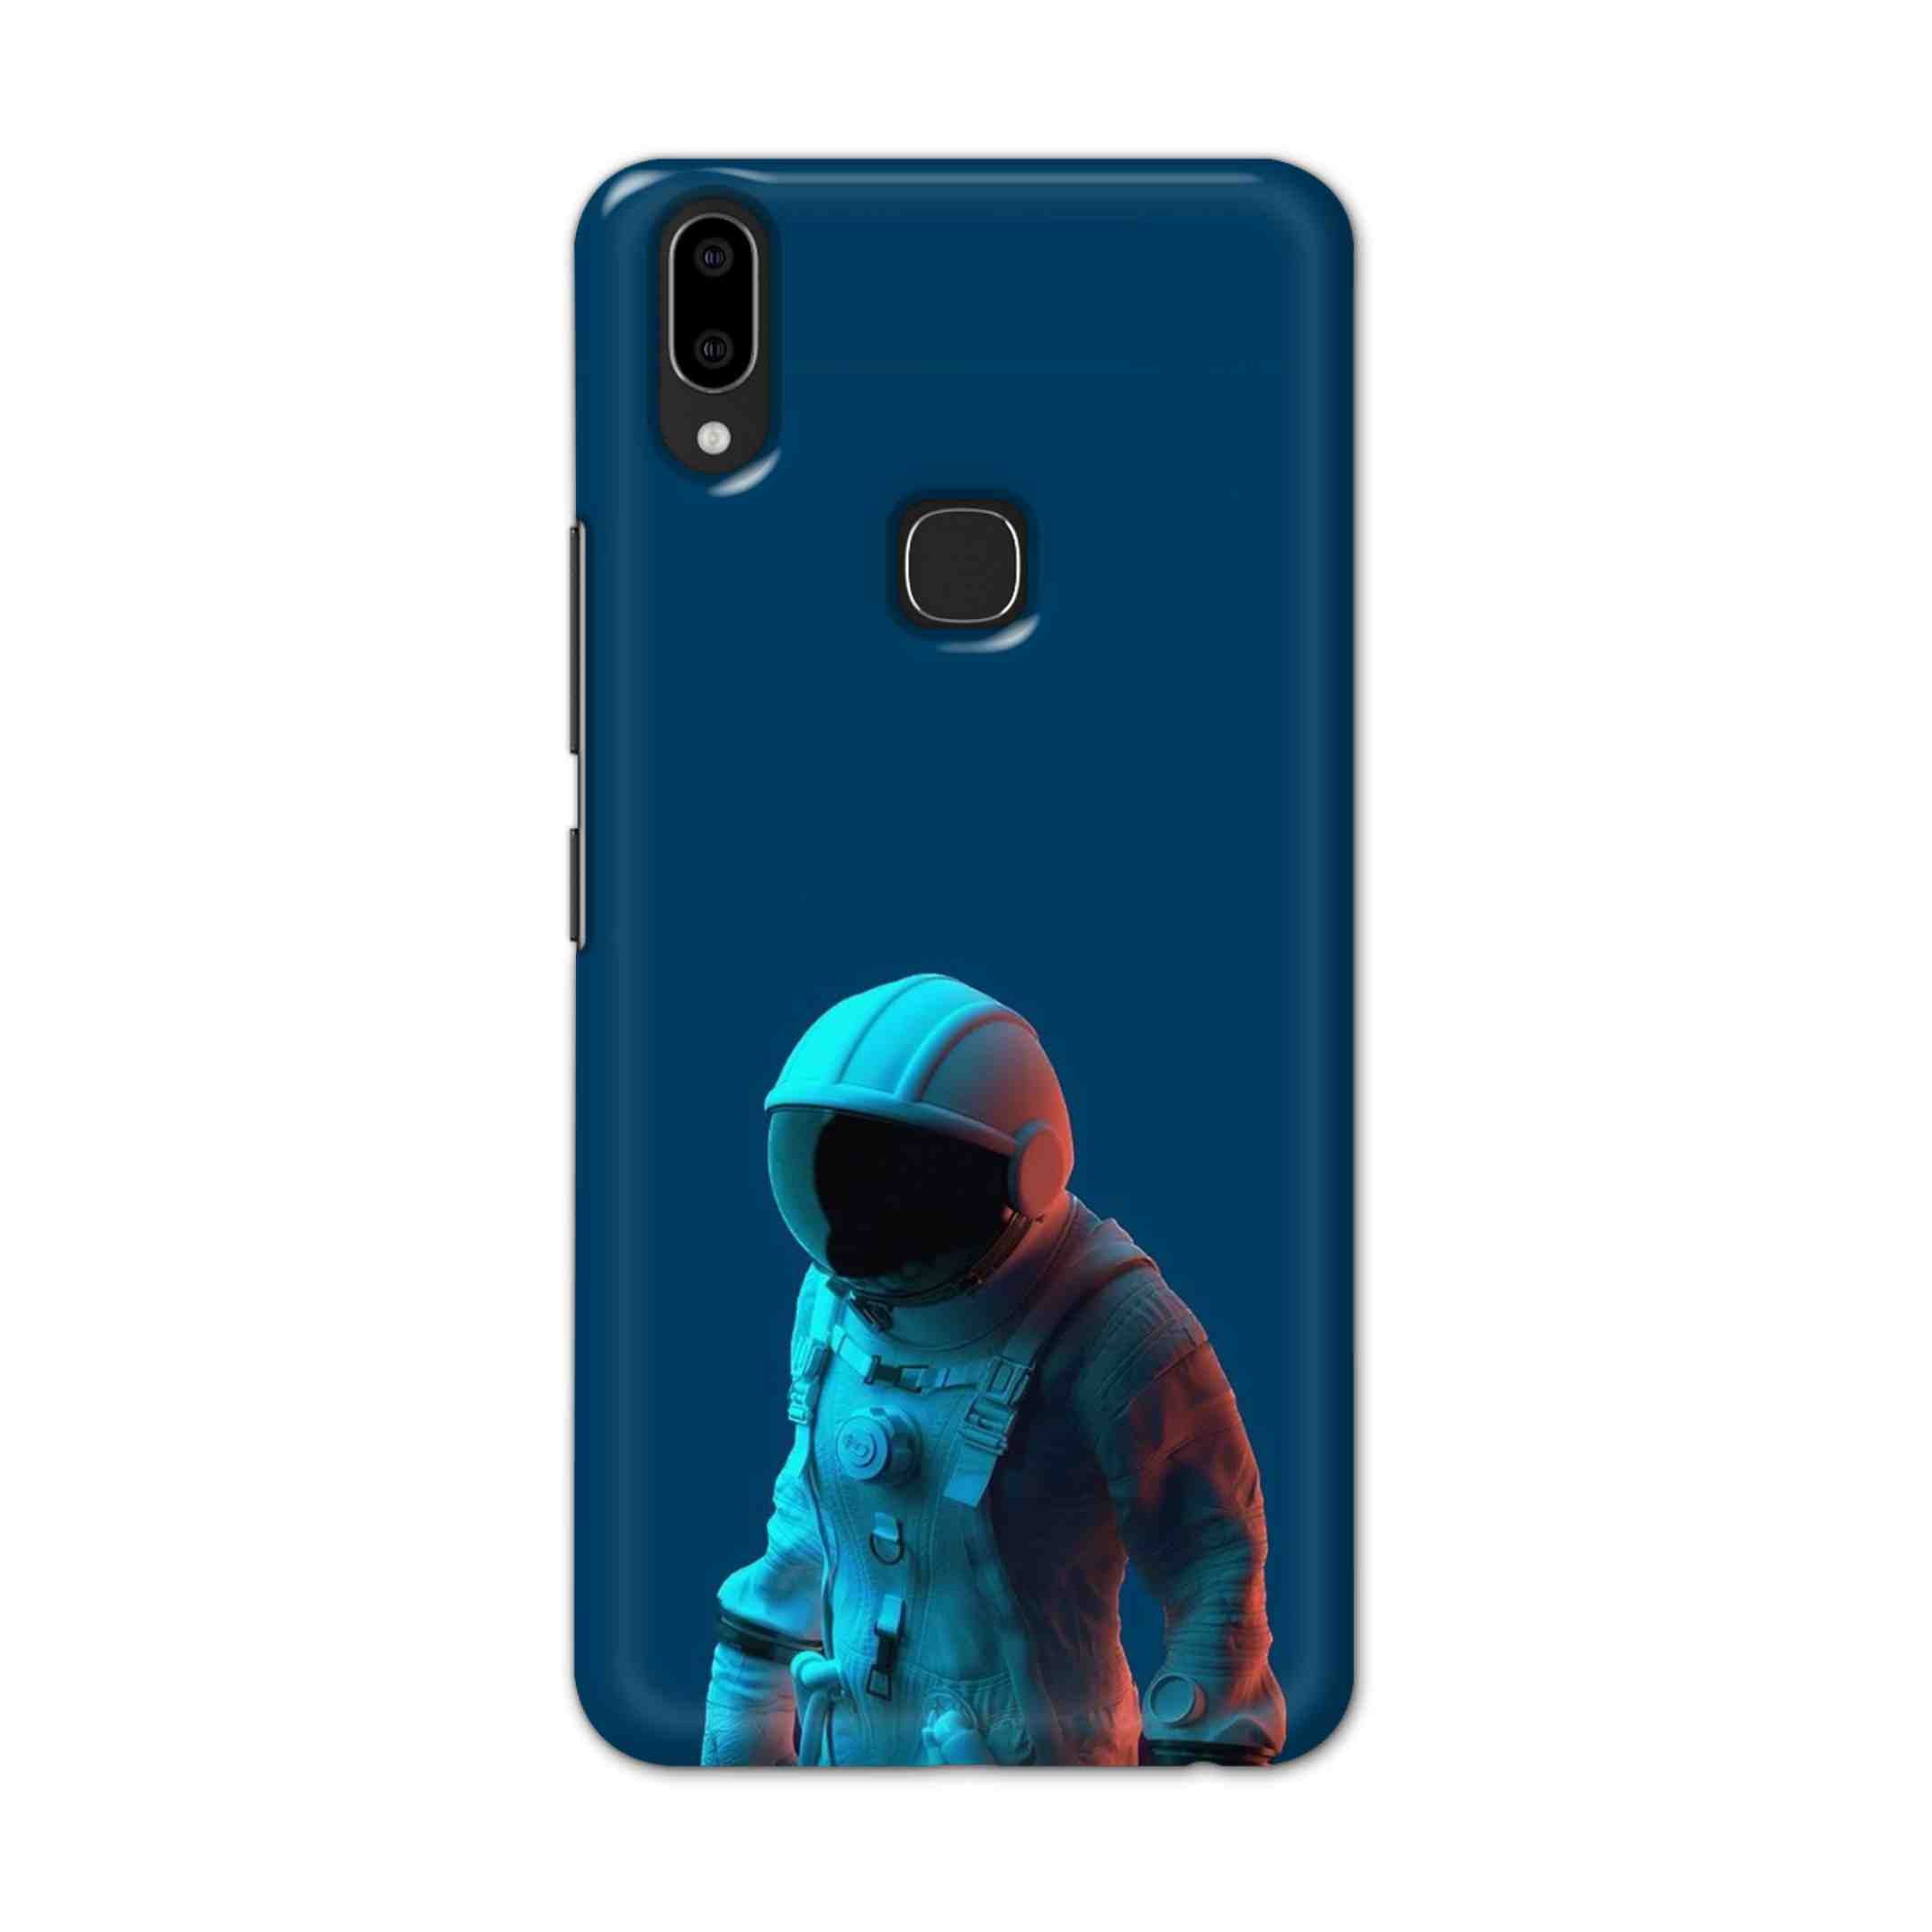 Buy Blue Astronaut Hard Back Mobile Phone Case Cover For Vivo V9 / V9 Youth Online